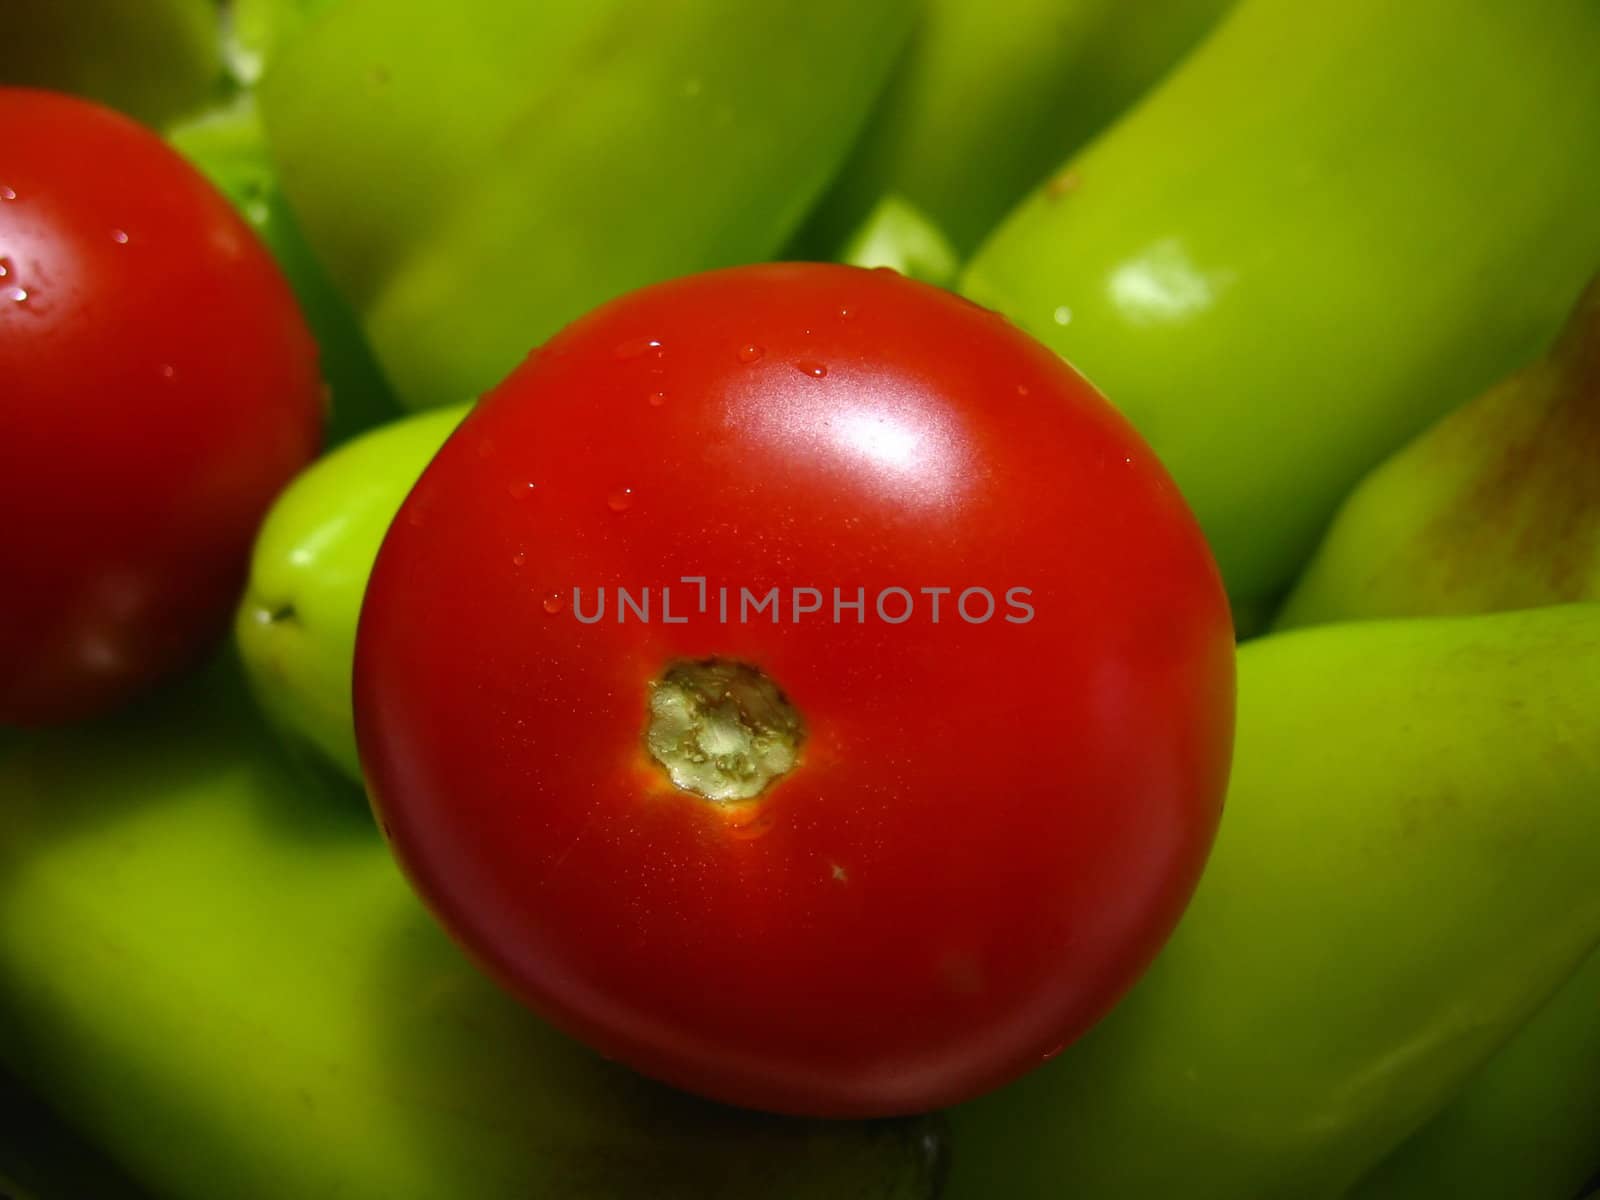 Tomato by tomatto